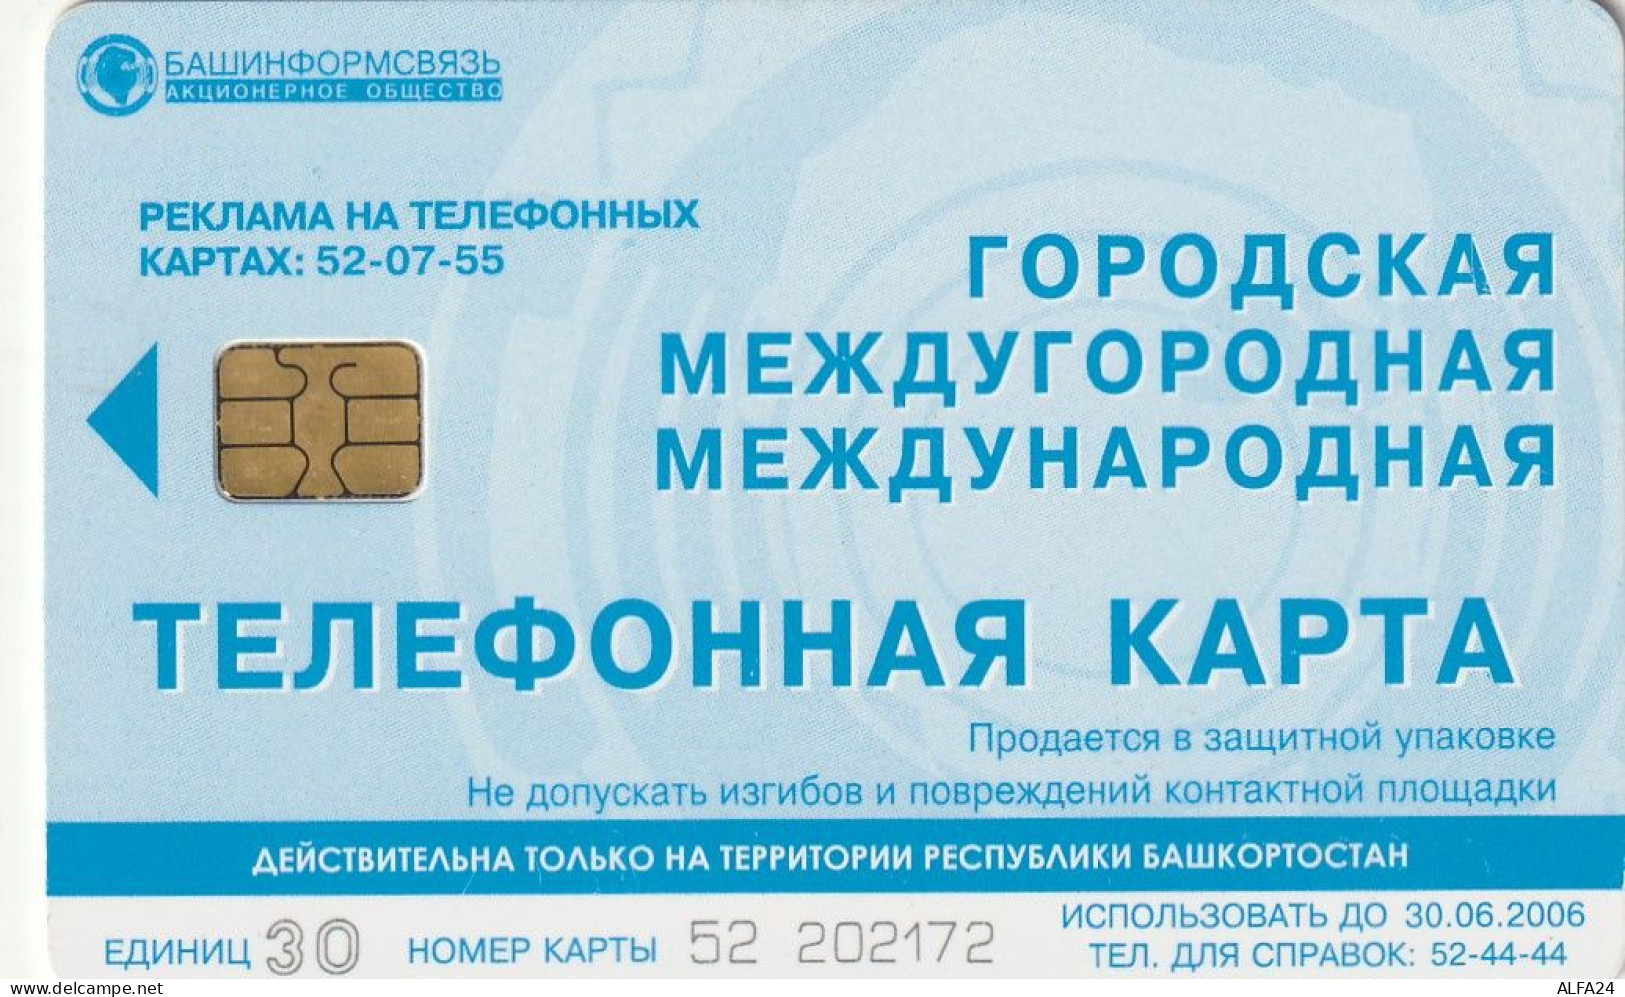 PHONE CARD RUSSIA Bashinformsvyaz - Ufa (E9.2.4 - Rusland